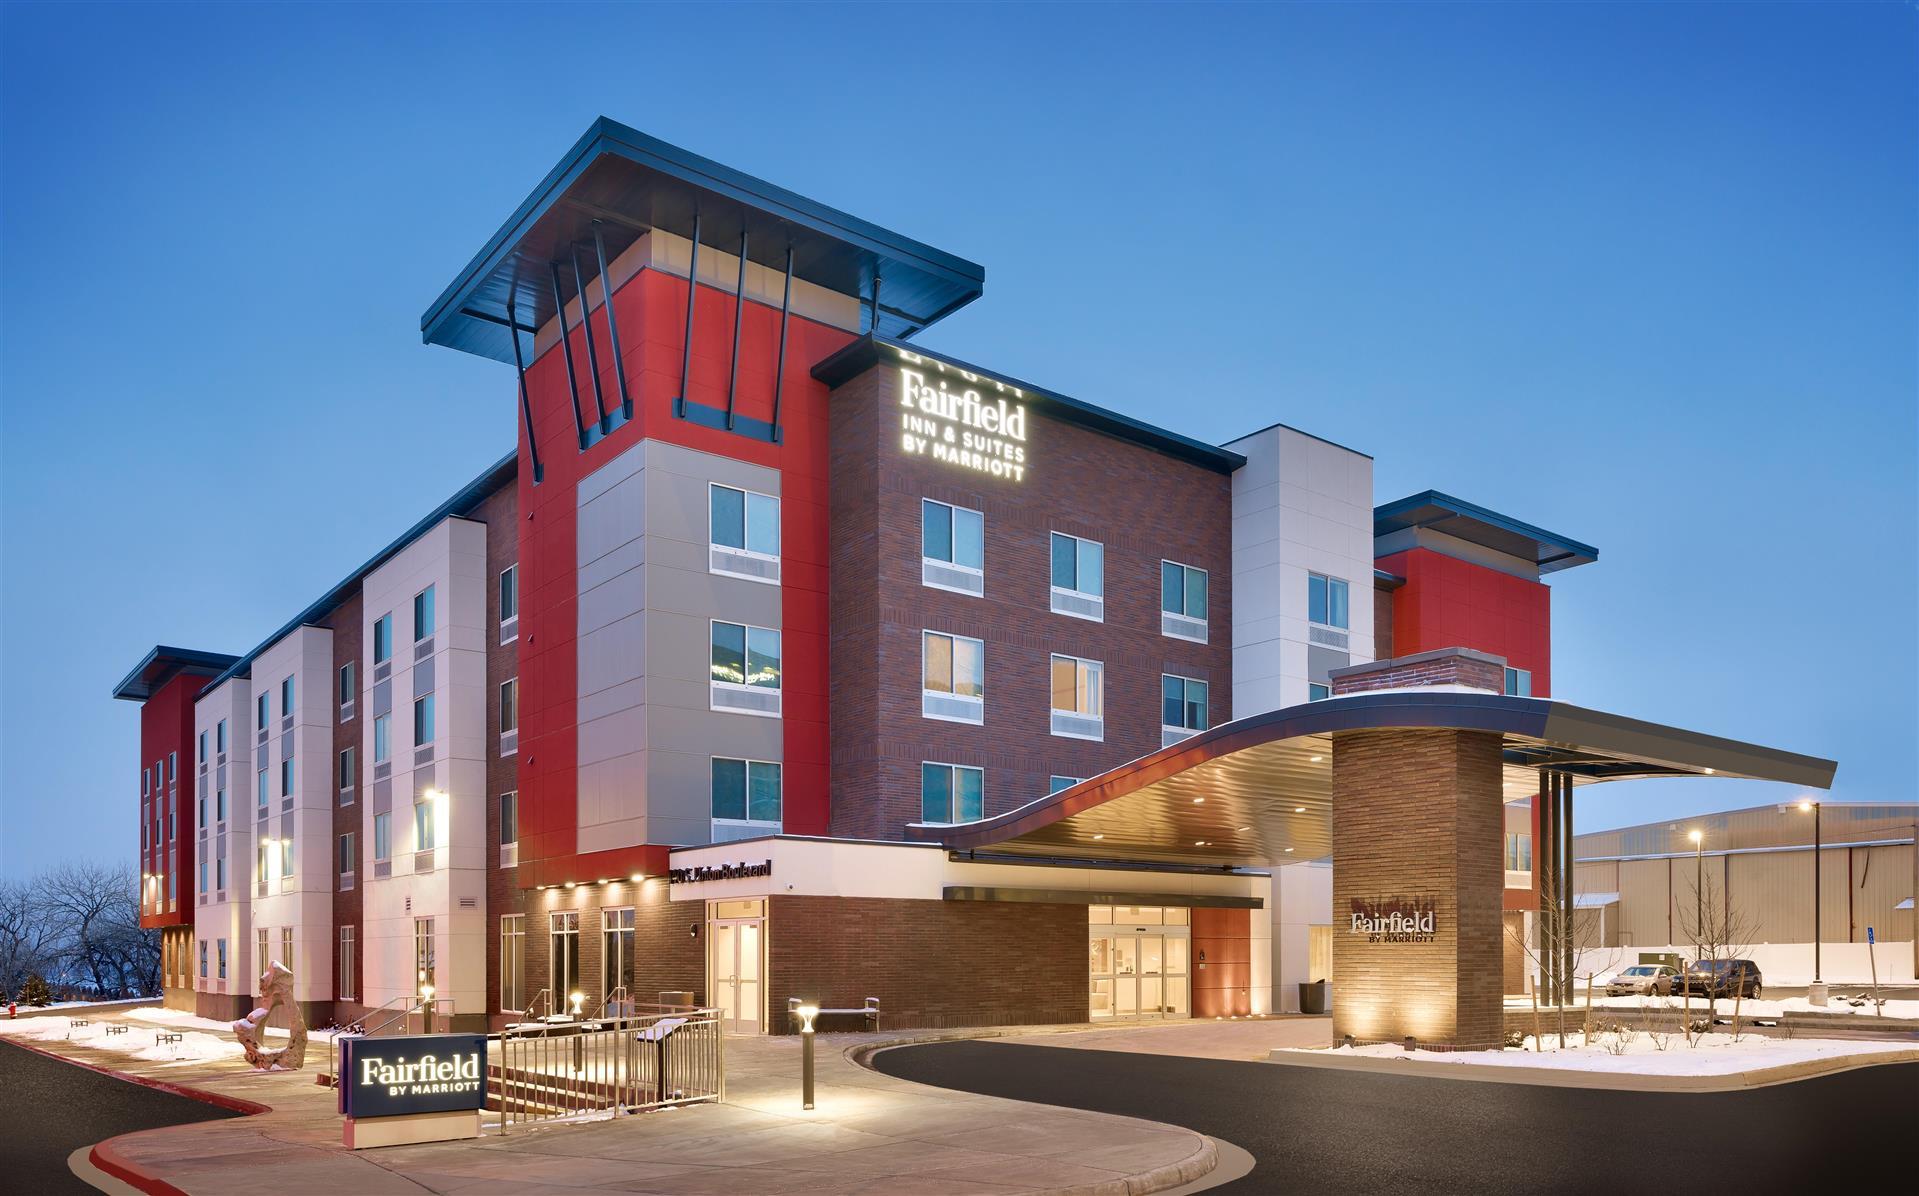 Fairfield Inn & Suites Denver West/Federal Center in Lakewood, CO